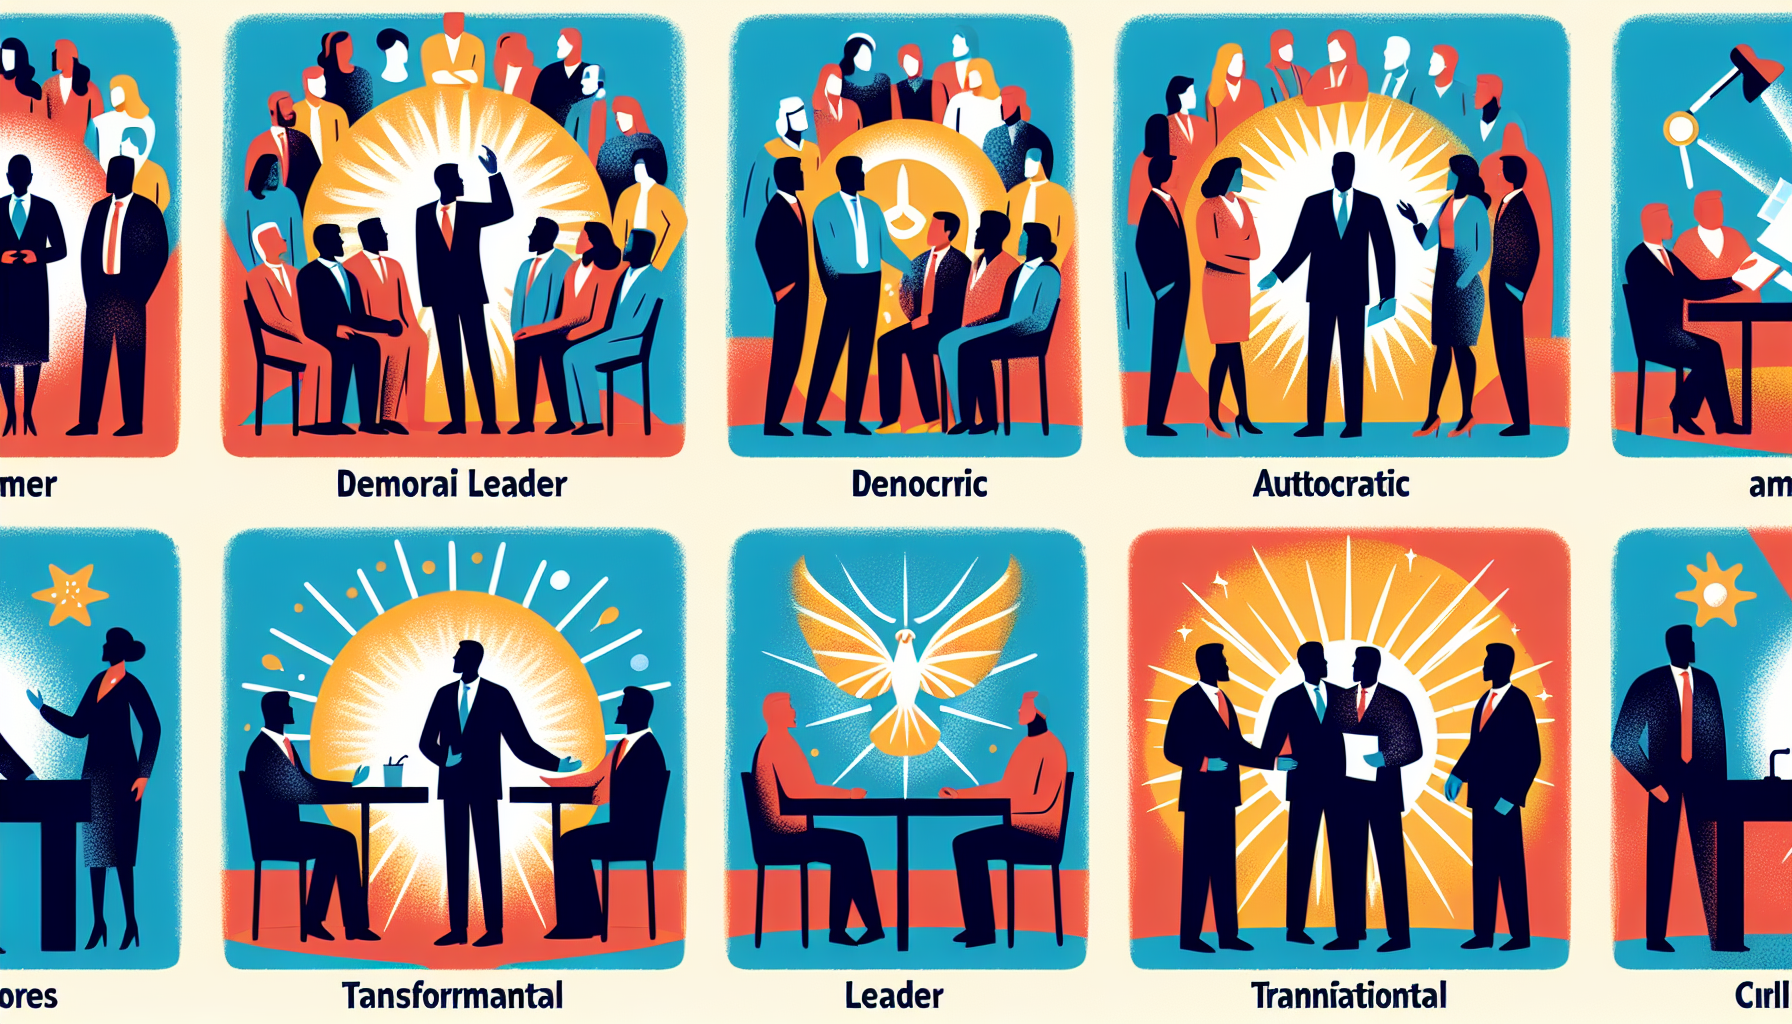 Understanding different leadership styles